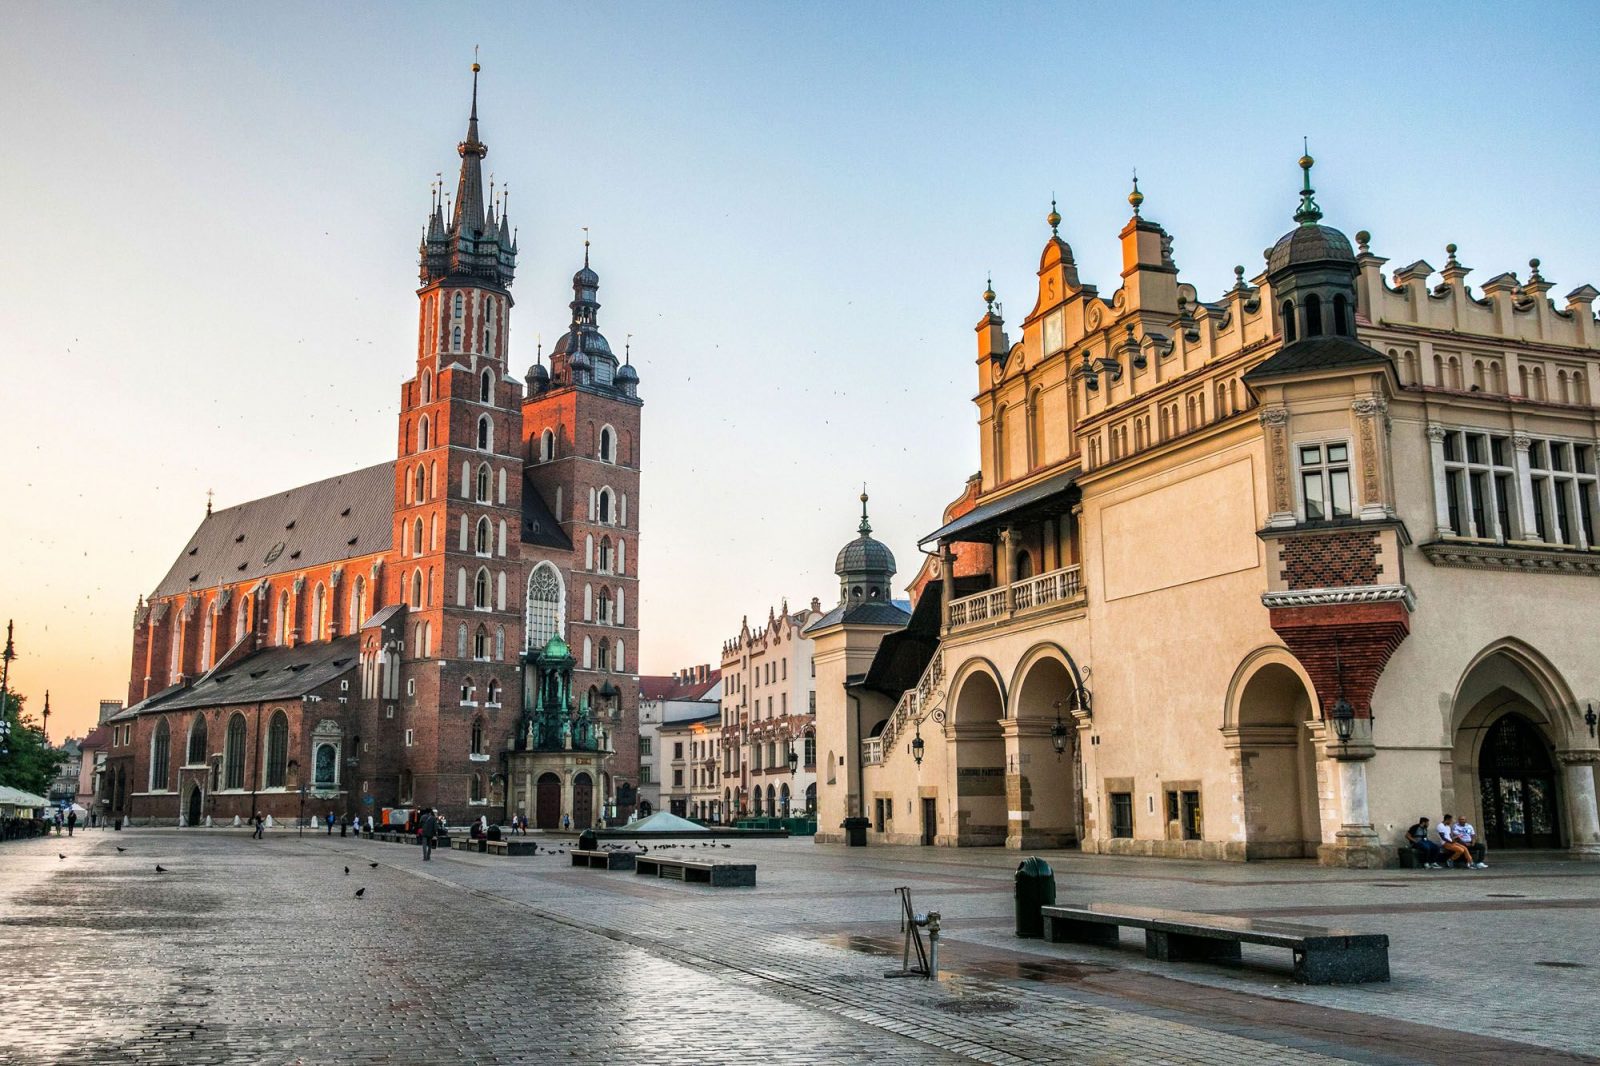 Can You Score 12/15 on This European Capital City Quiz? Krakow, Poland